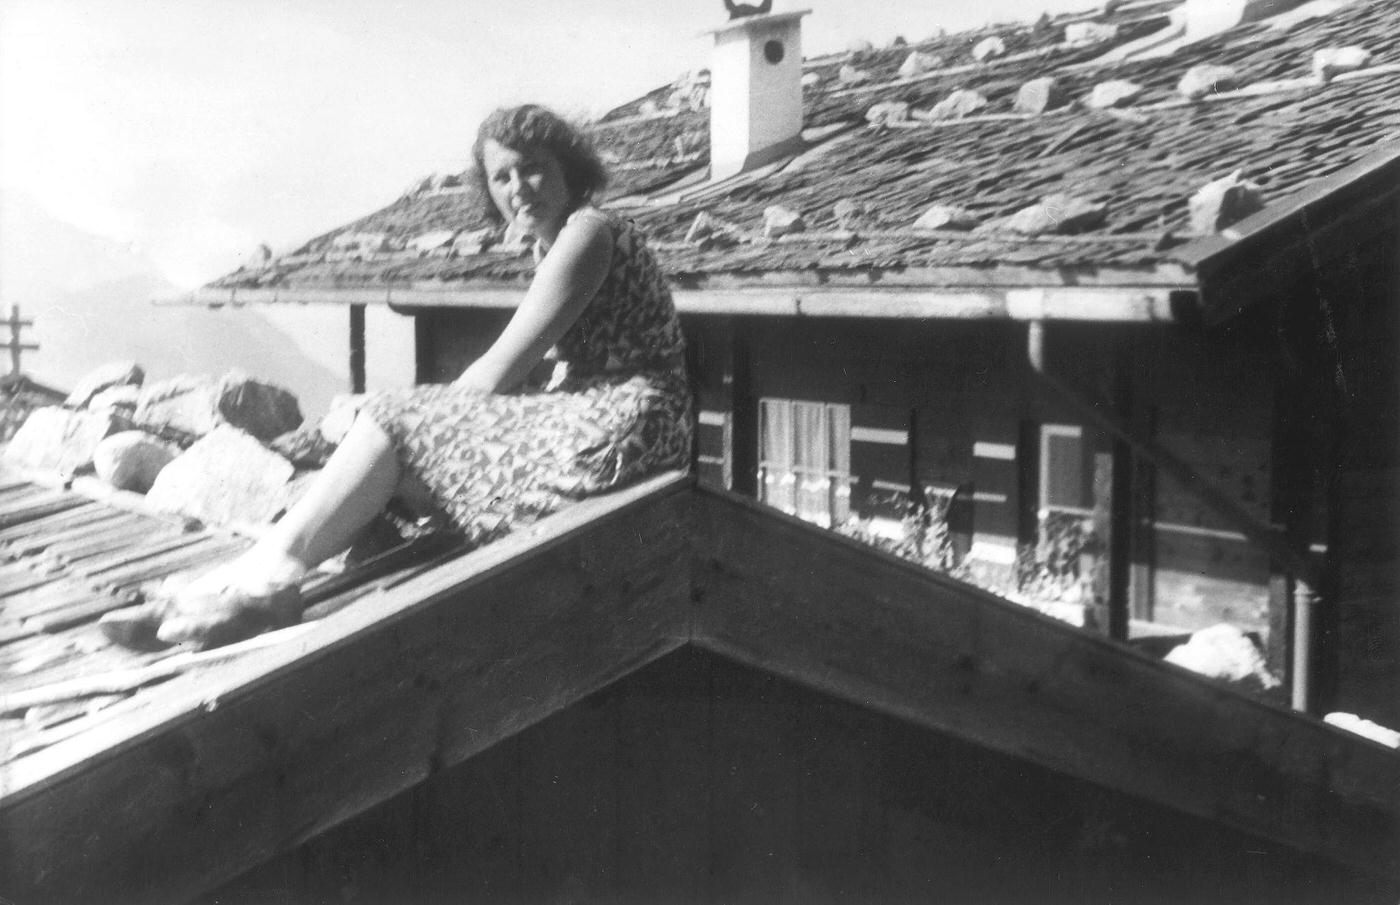 Geli Raubal on a shingle roof at Hitler's Obersalzberg estate (1930), a portrait of Adolf Hitler's niece.